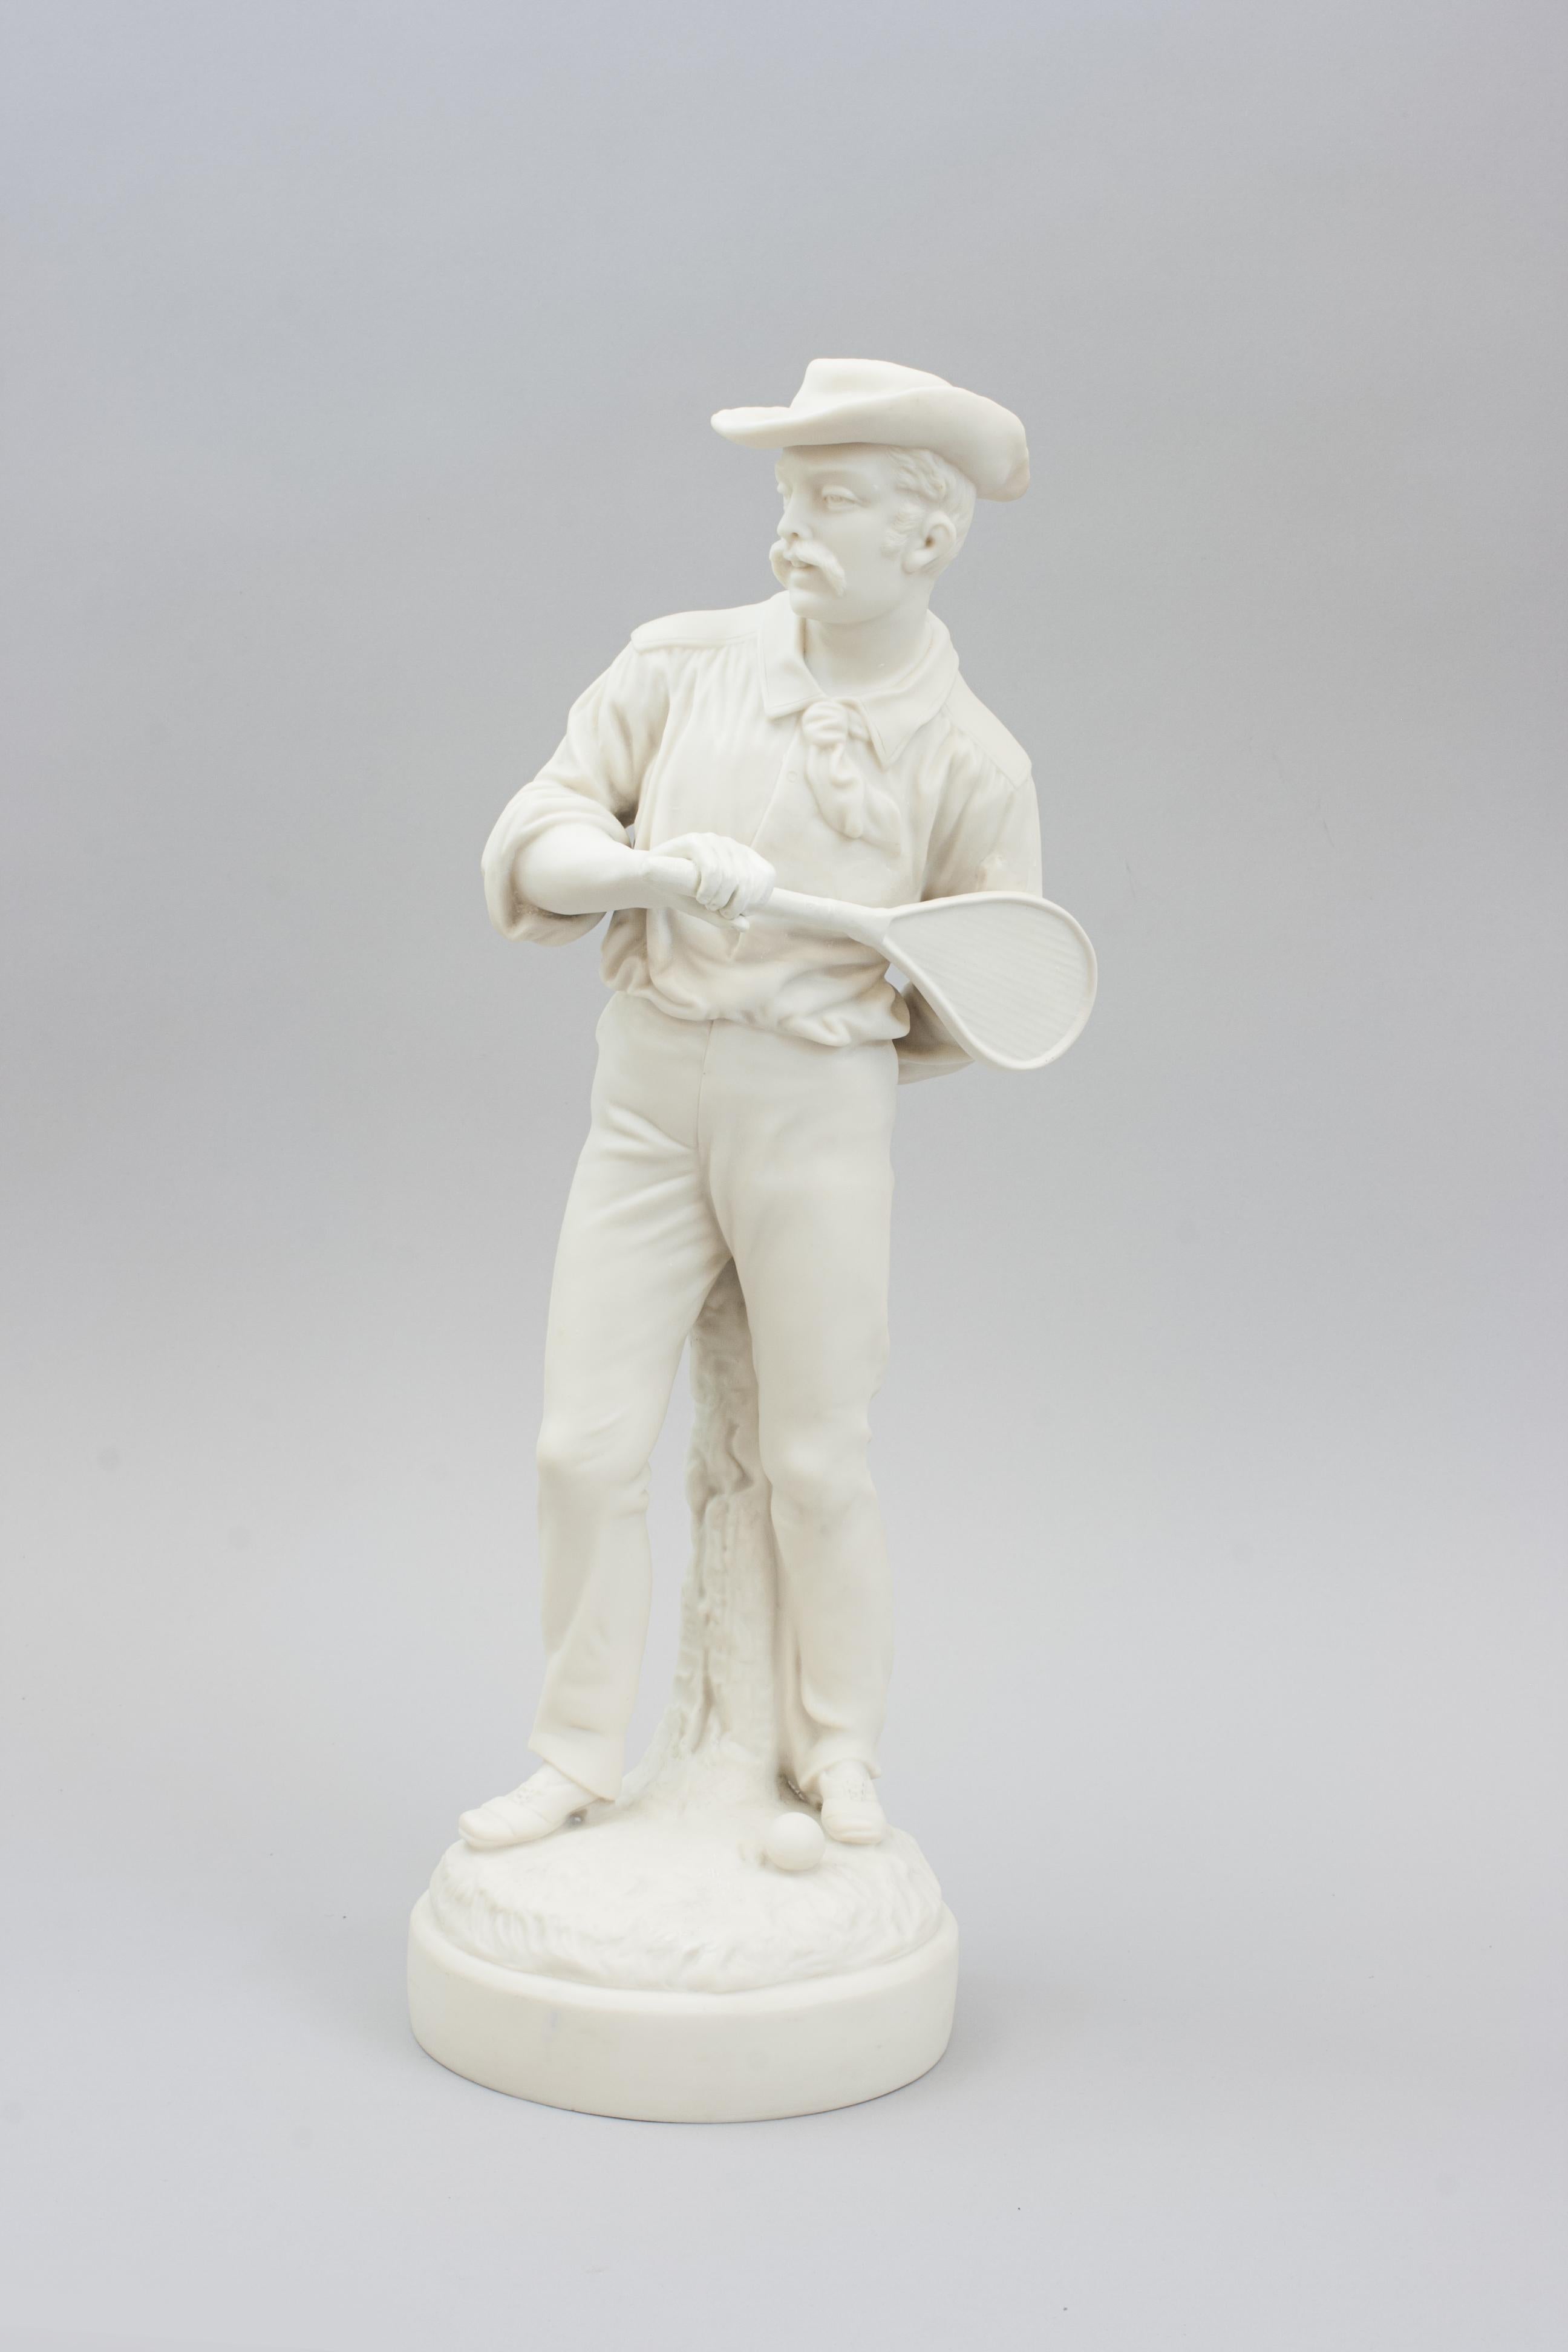 Ceramic Antique Tennis Figure, James Ernest Renshaw, Parian Ware. For Sale